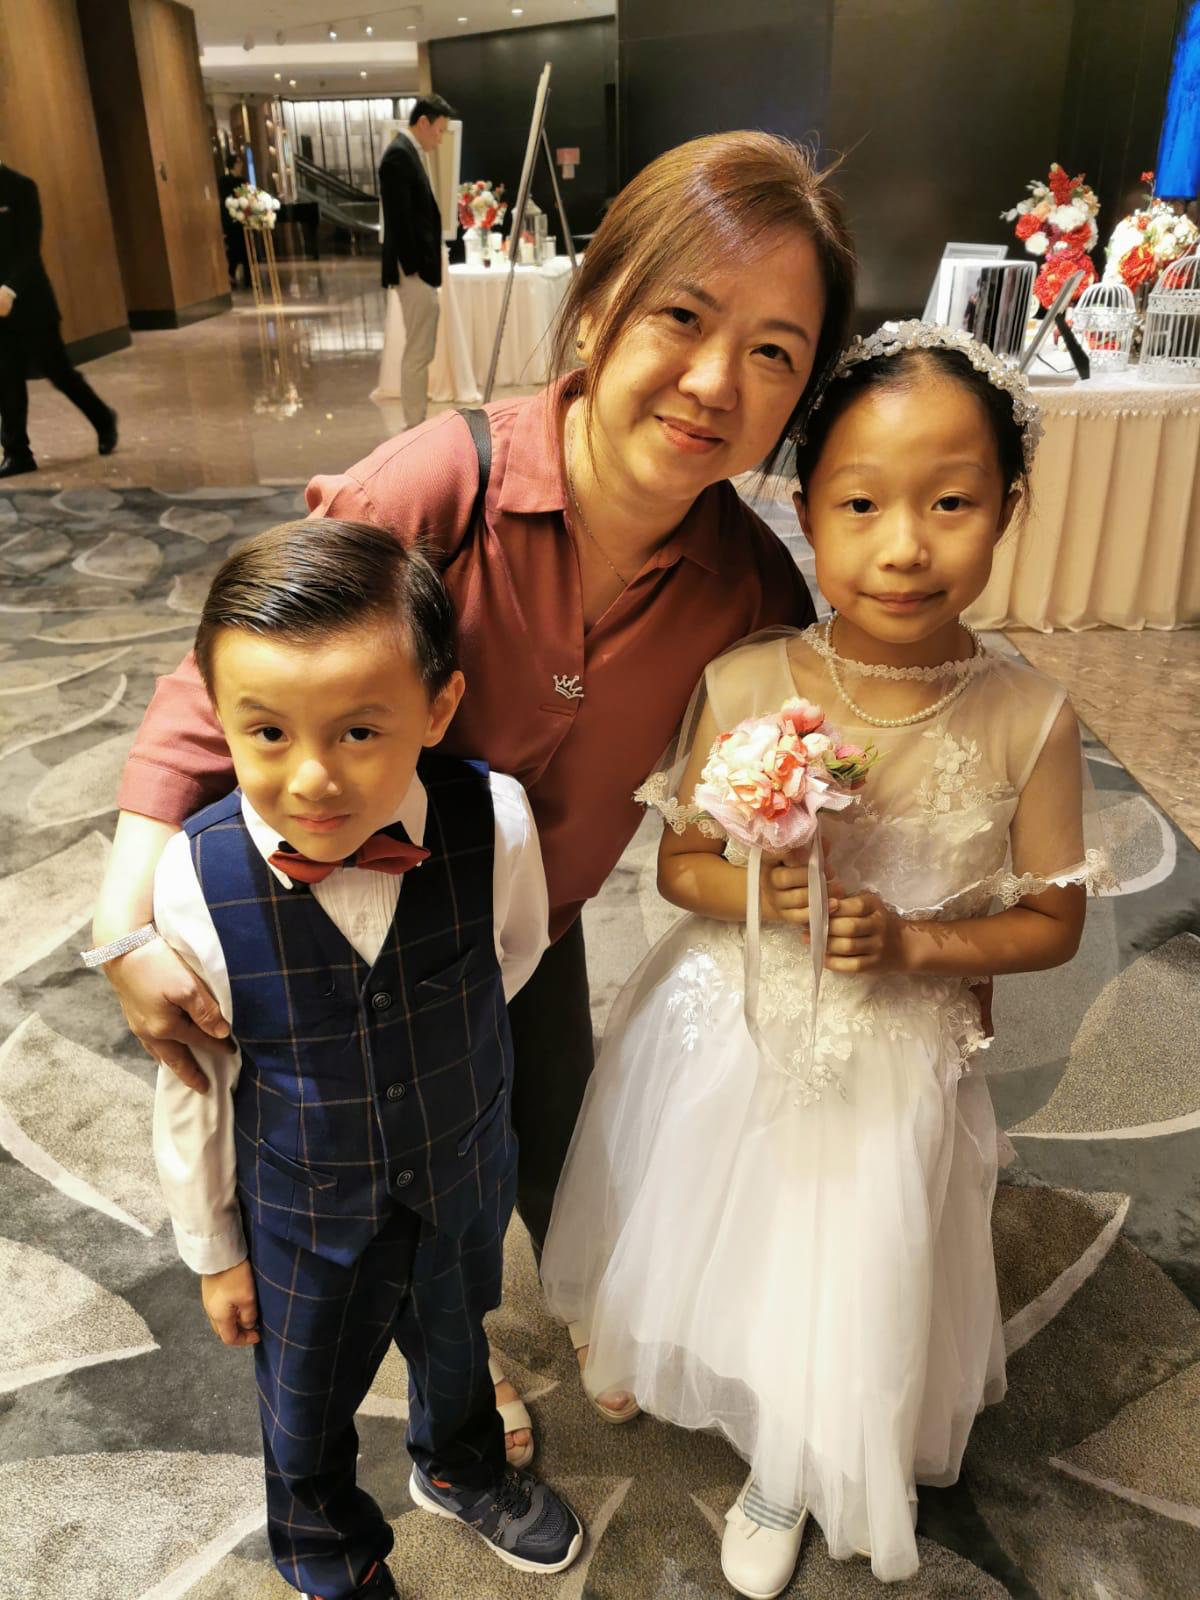 Queeny Ng婚禮統籌師工作紀錄: JW Marriott - 中式婚禮統籌